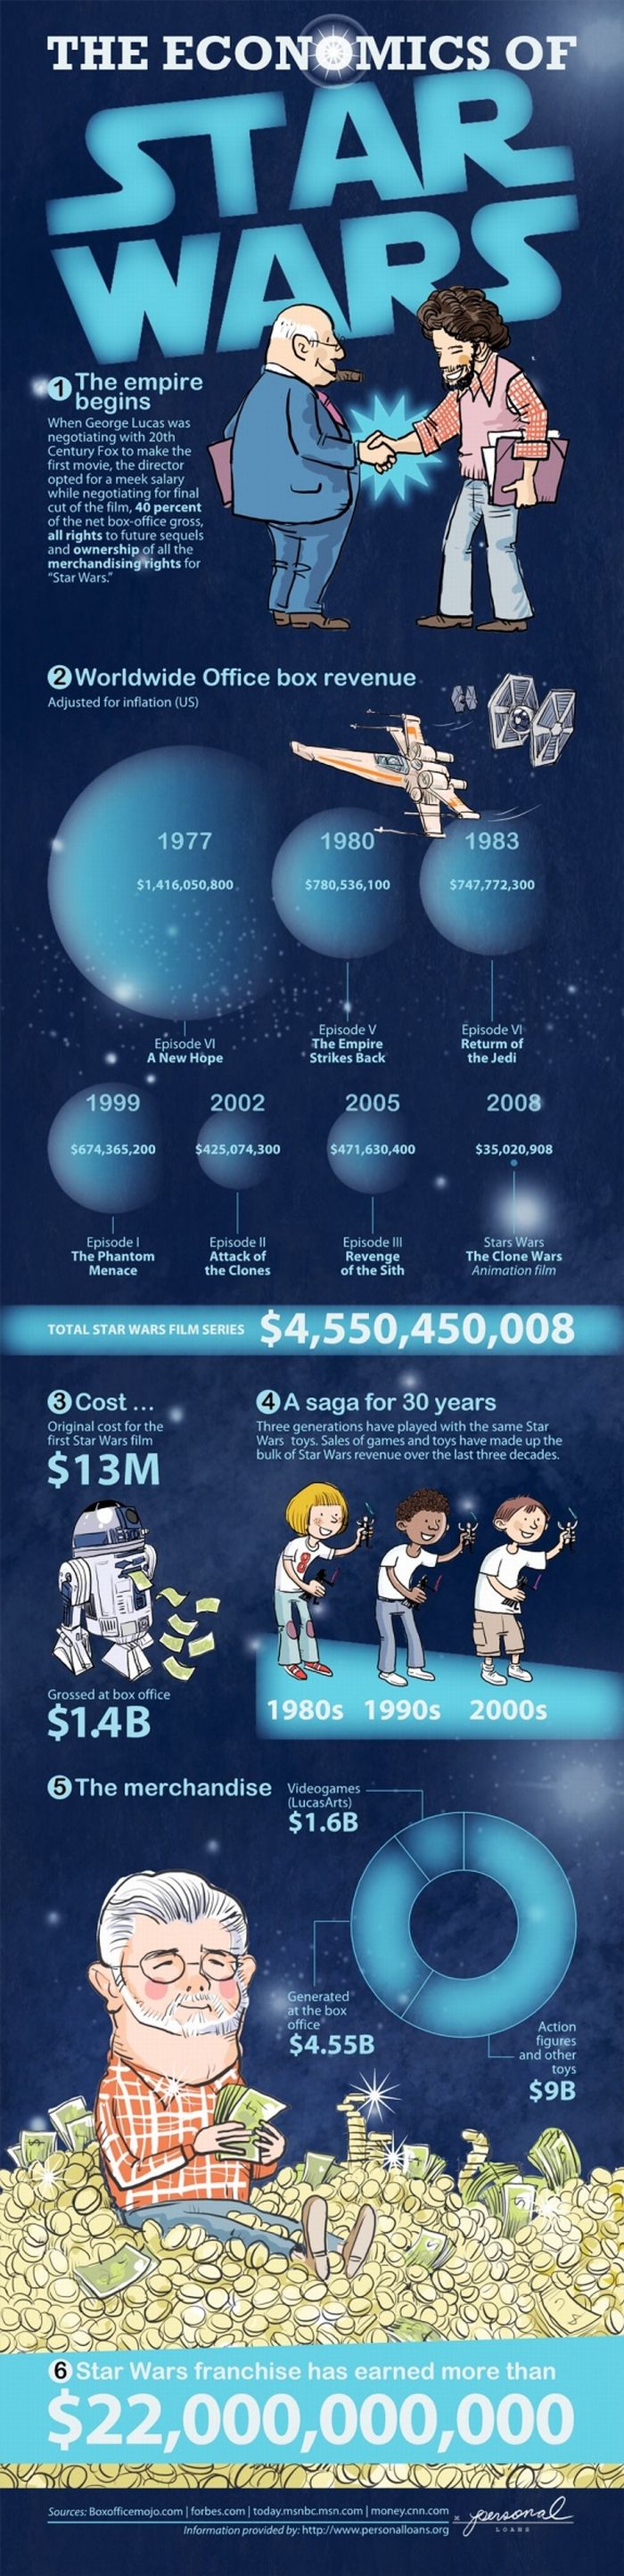 The Economics of Star Wars (infographic)